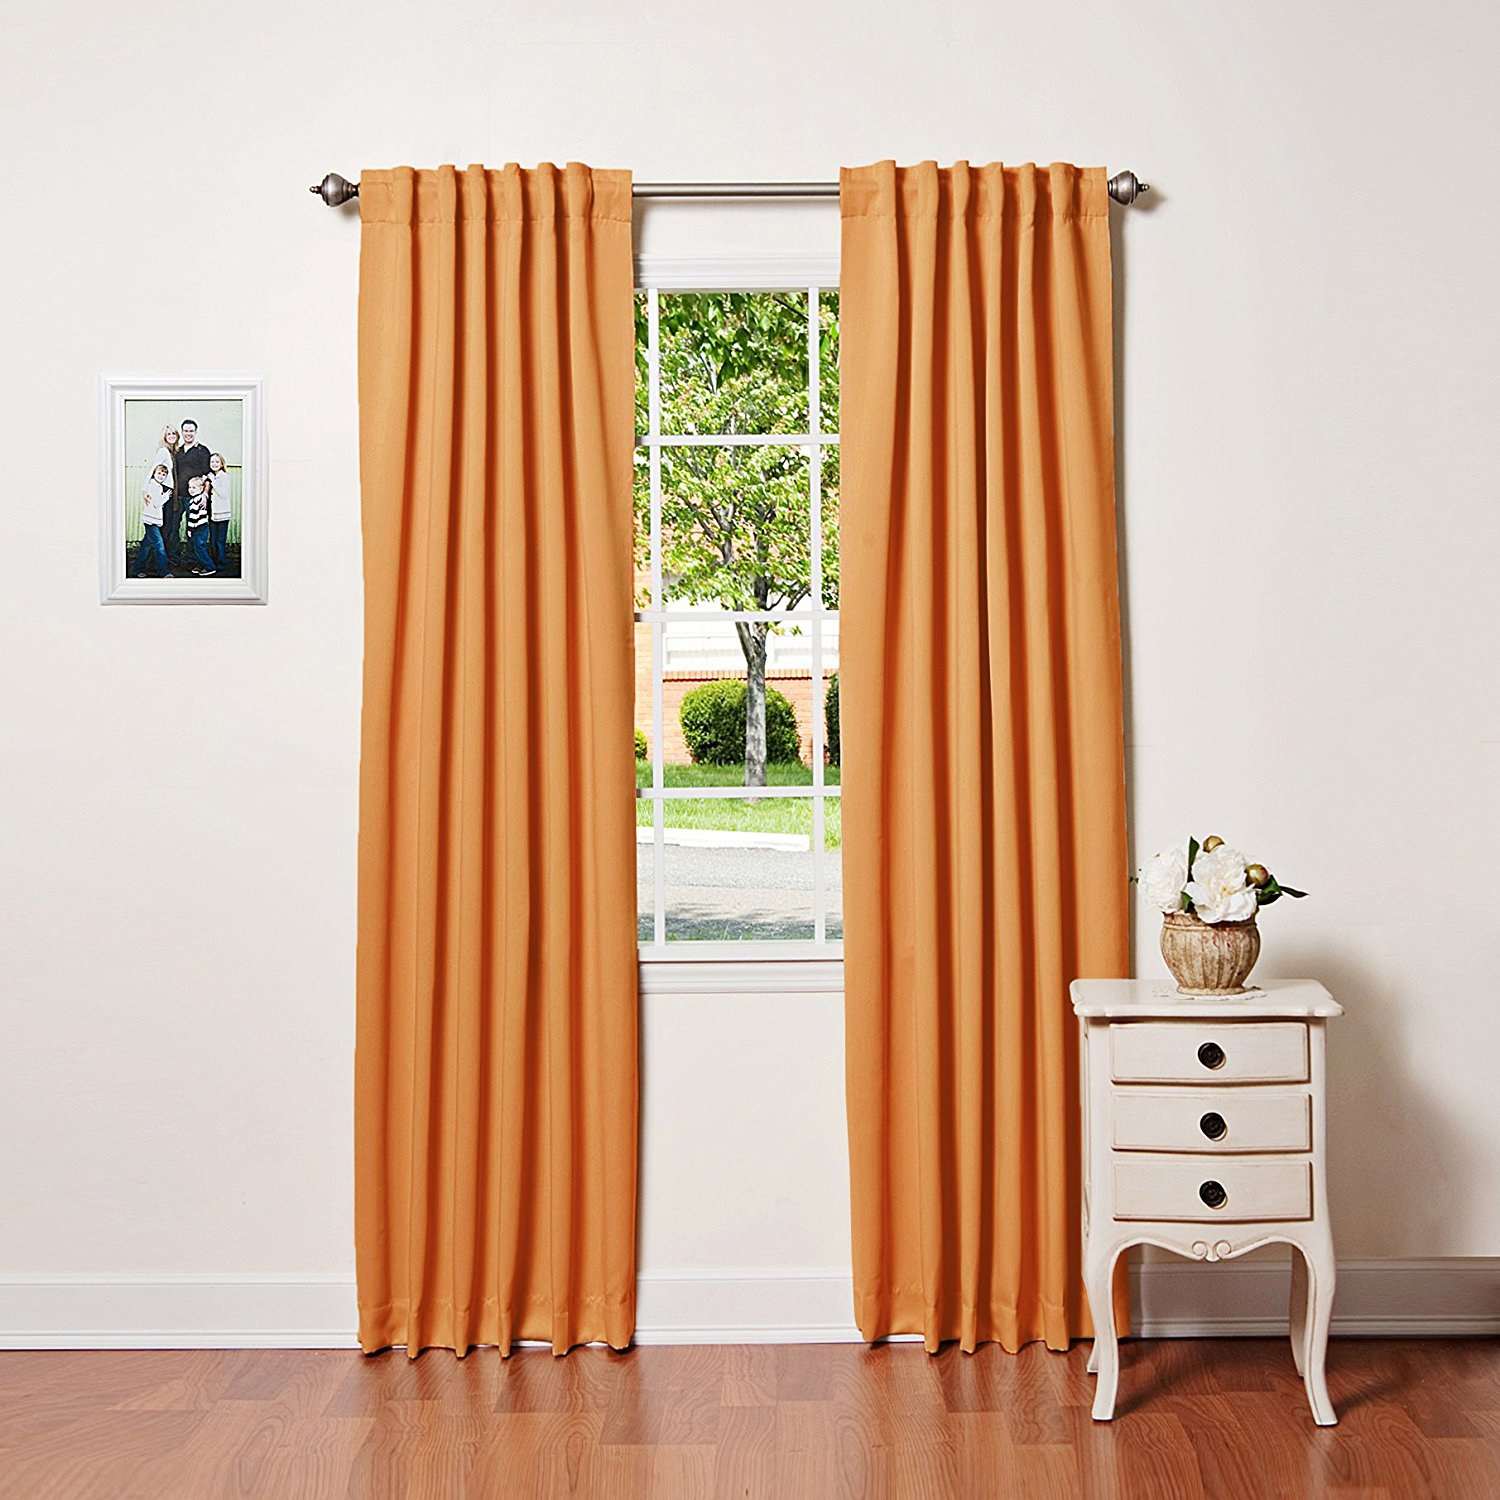 orange rod pocket drapes in white room in front of window